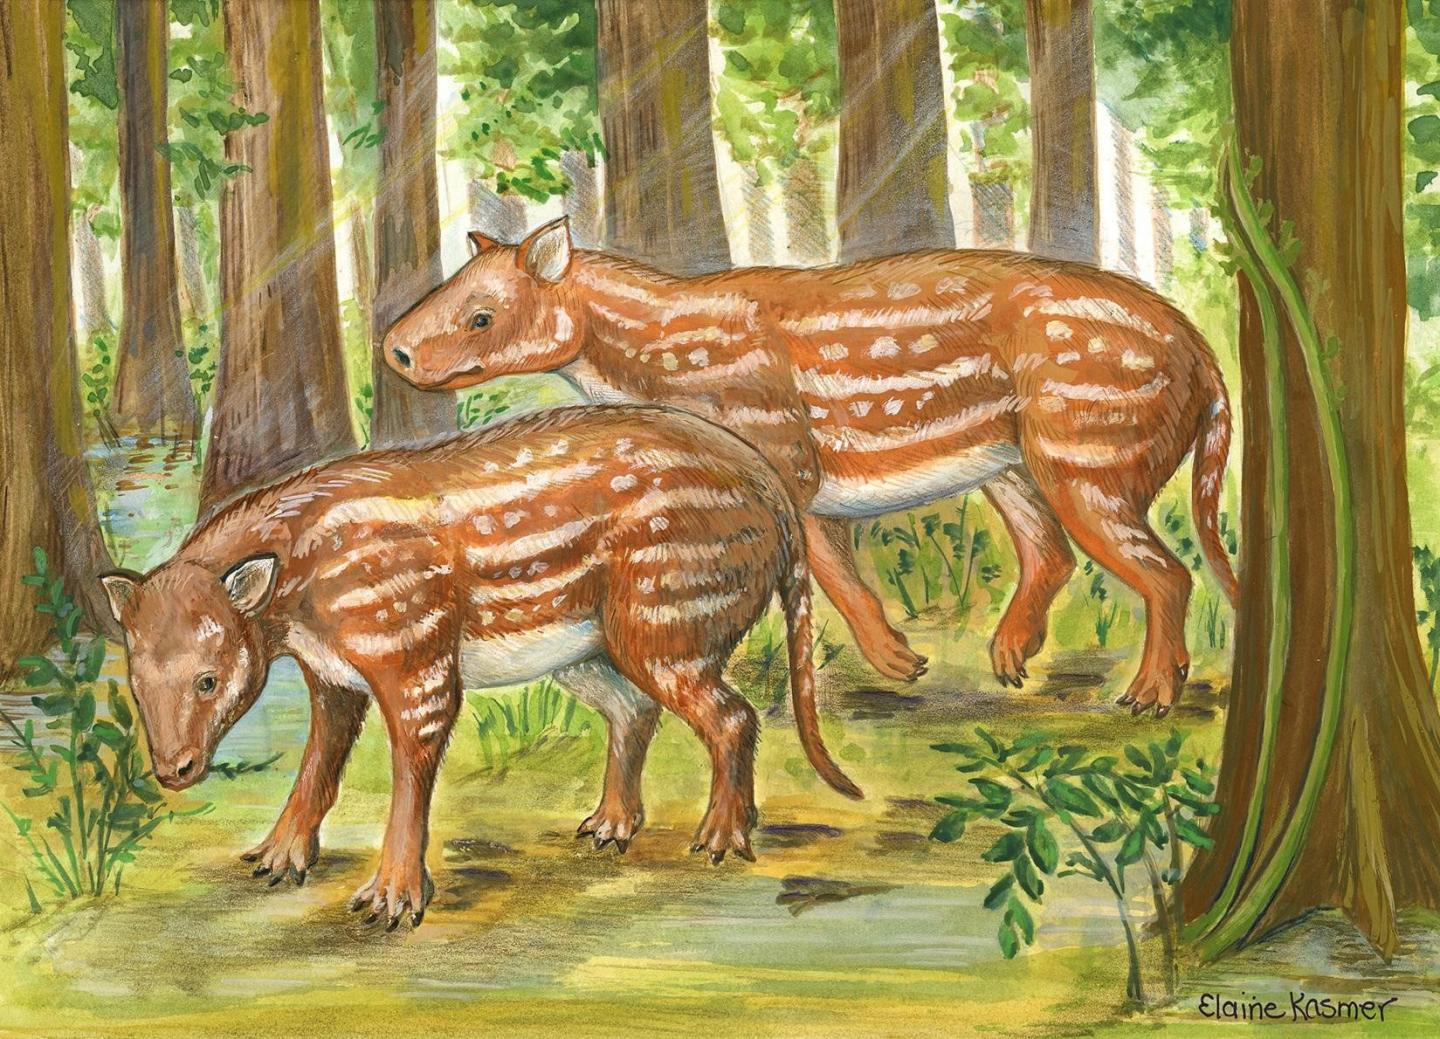 Life reconstruction of Cambaytherium (artwork by Elaine Kasmer)